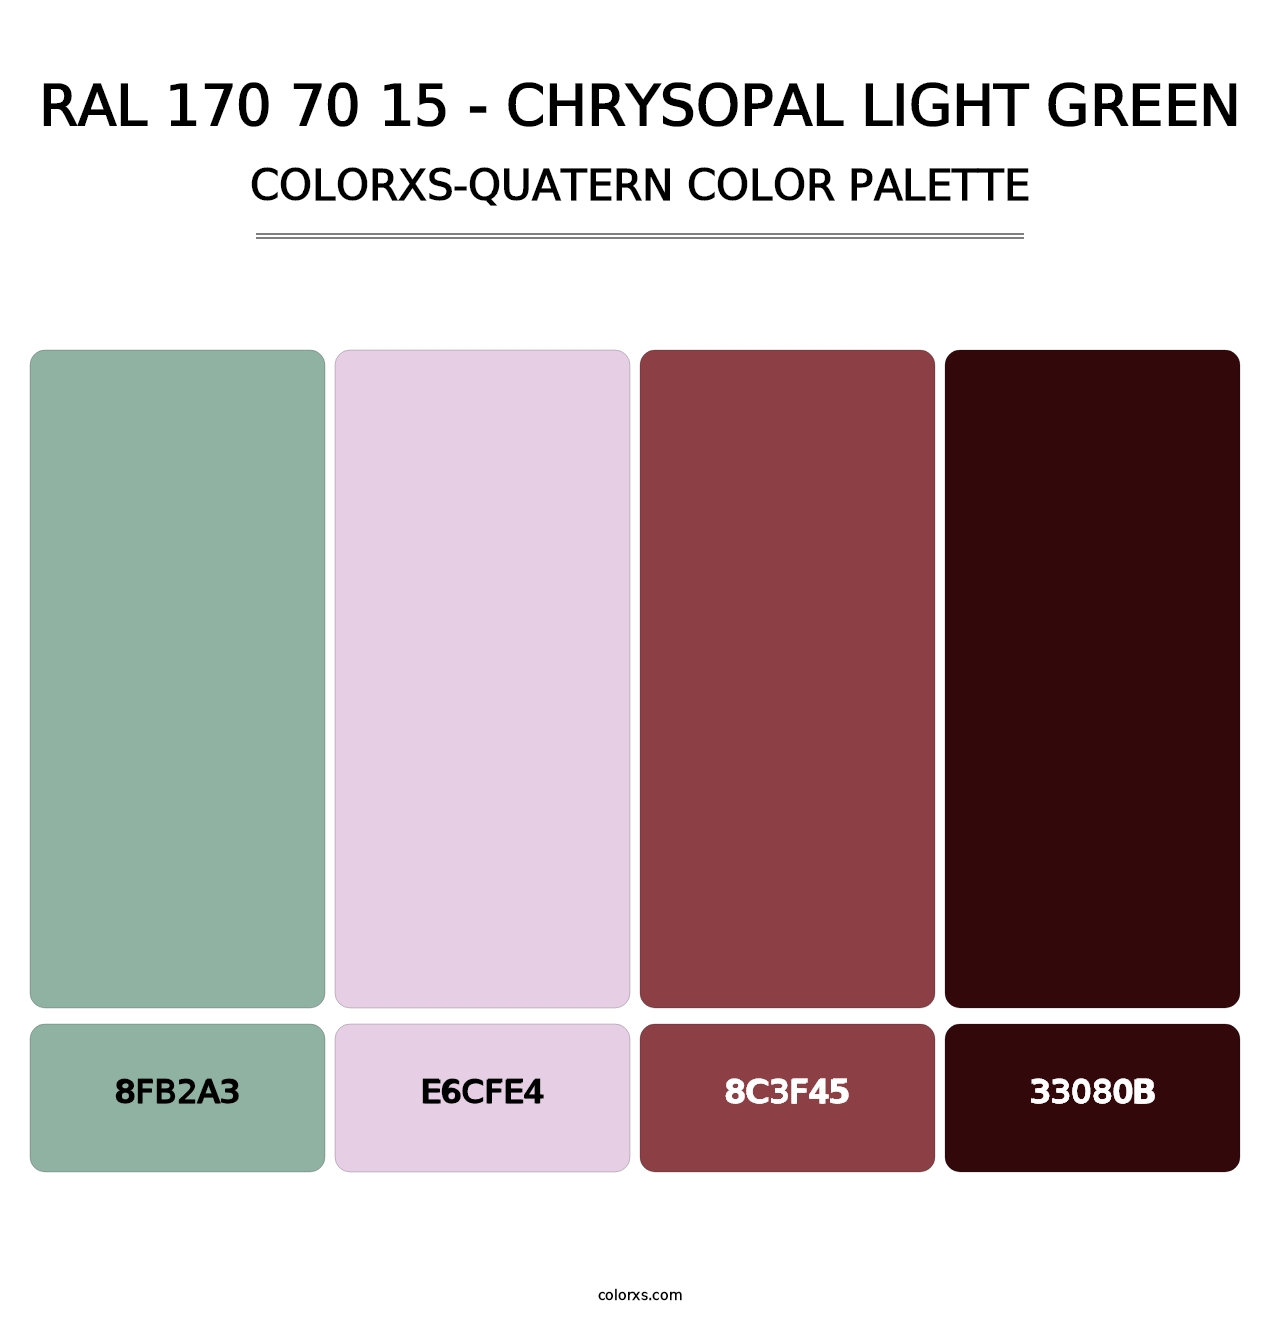 RAL 170 70 15 - Chrysopal Light Green - Colorxs Quatern Palette